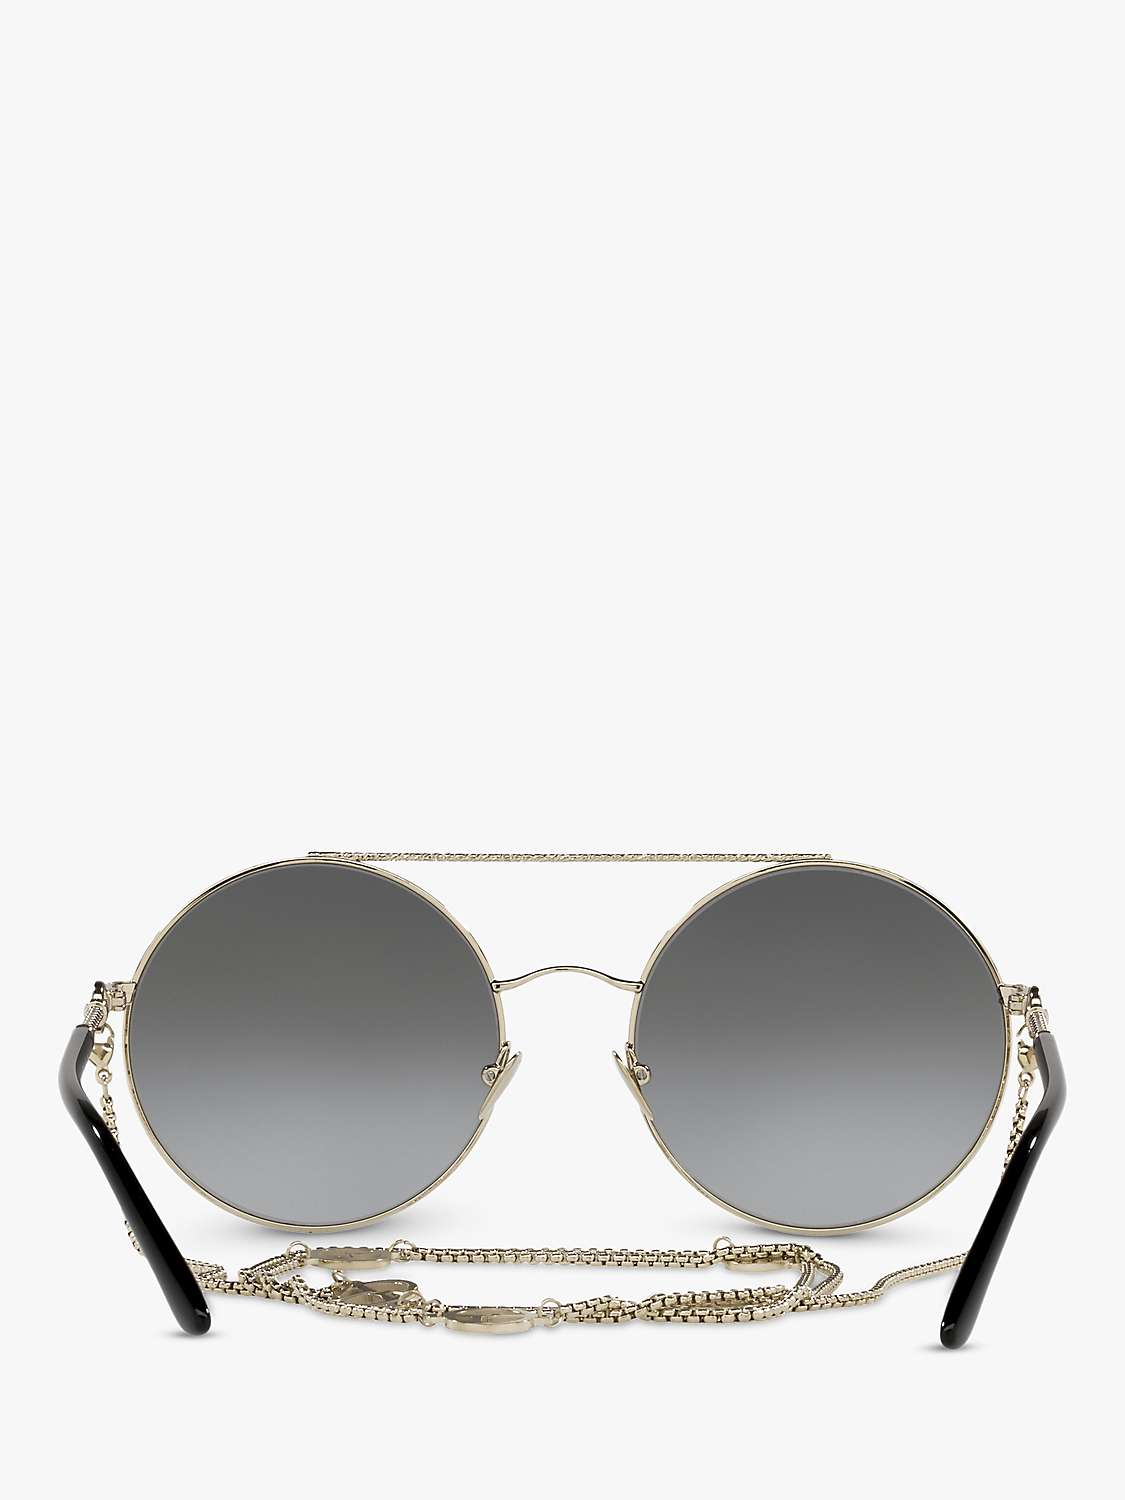 Buy Giorgio Armani AR6135 Women's Round Sunglasses Online at johnlewis.com